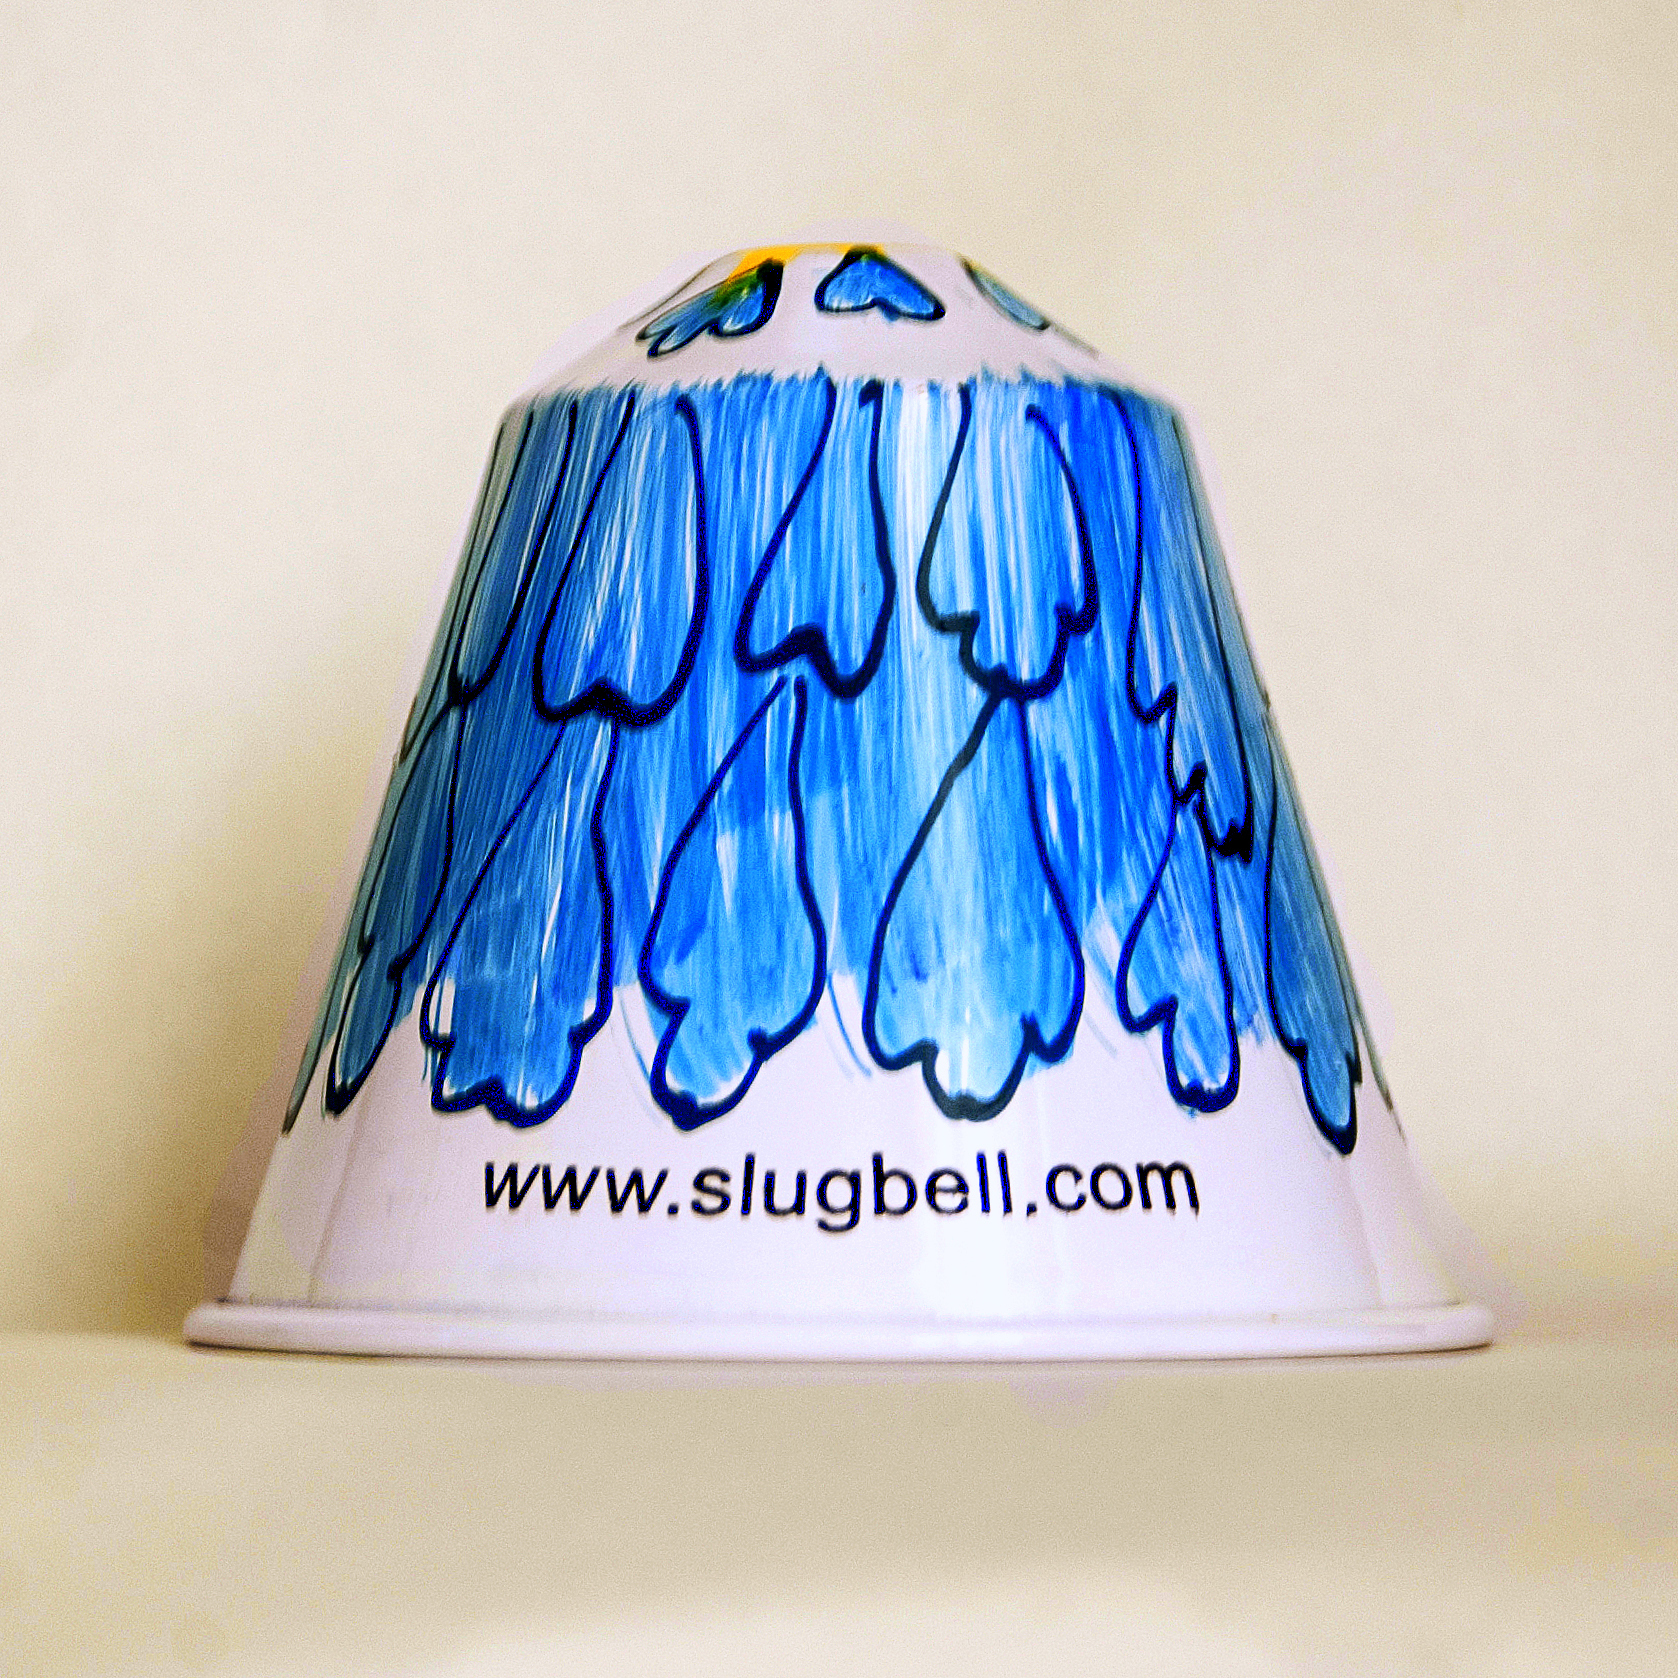 Slug Bell - Pot small - UK only